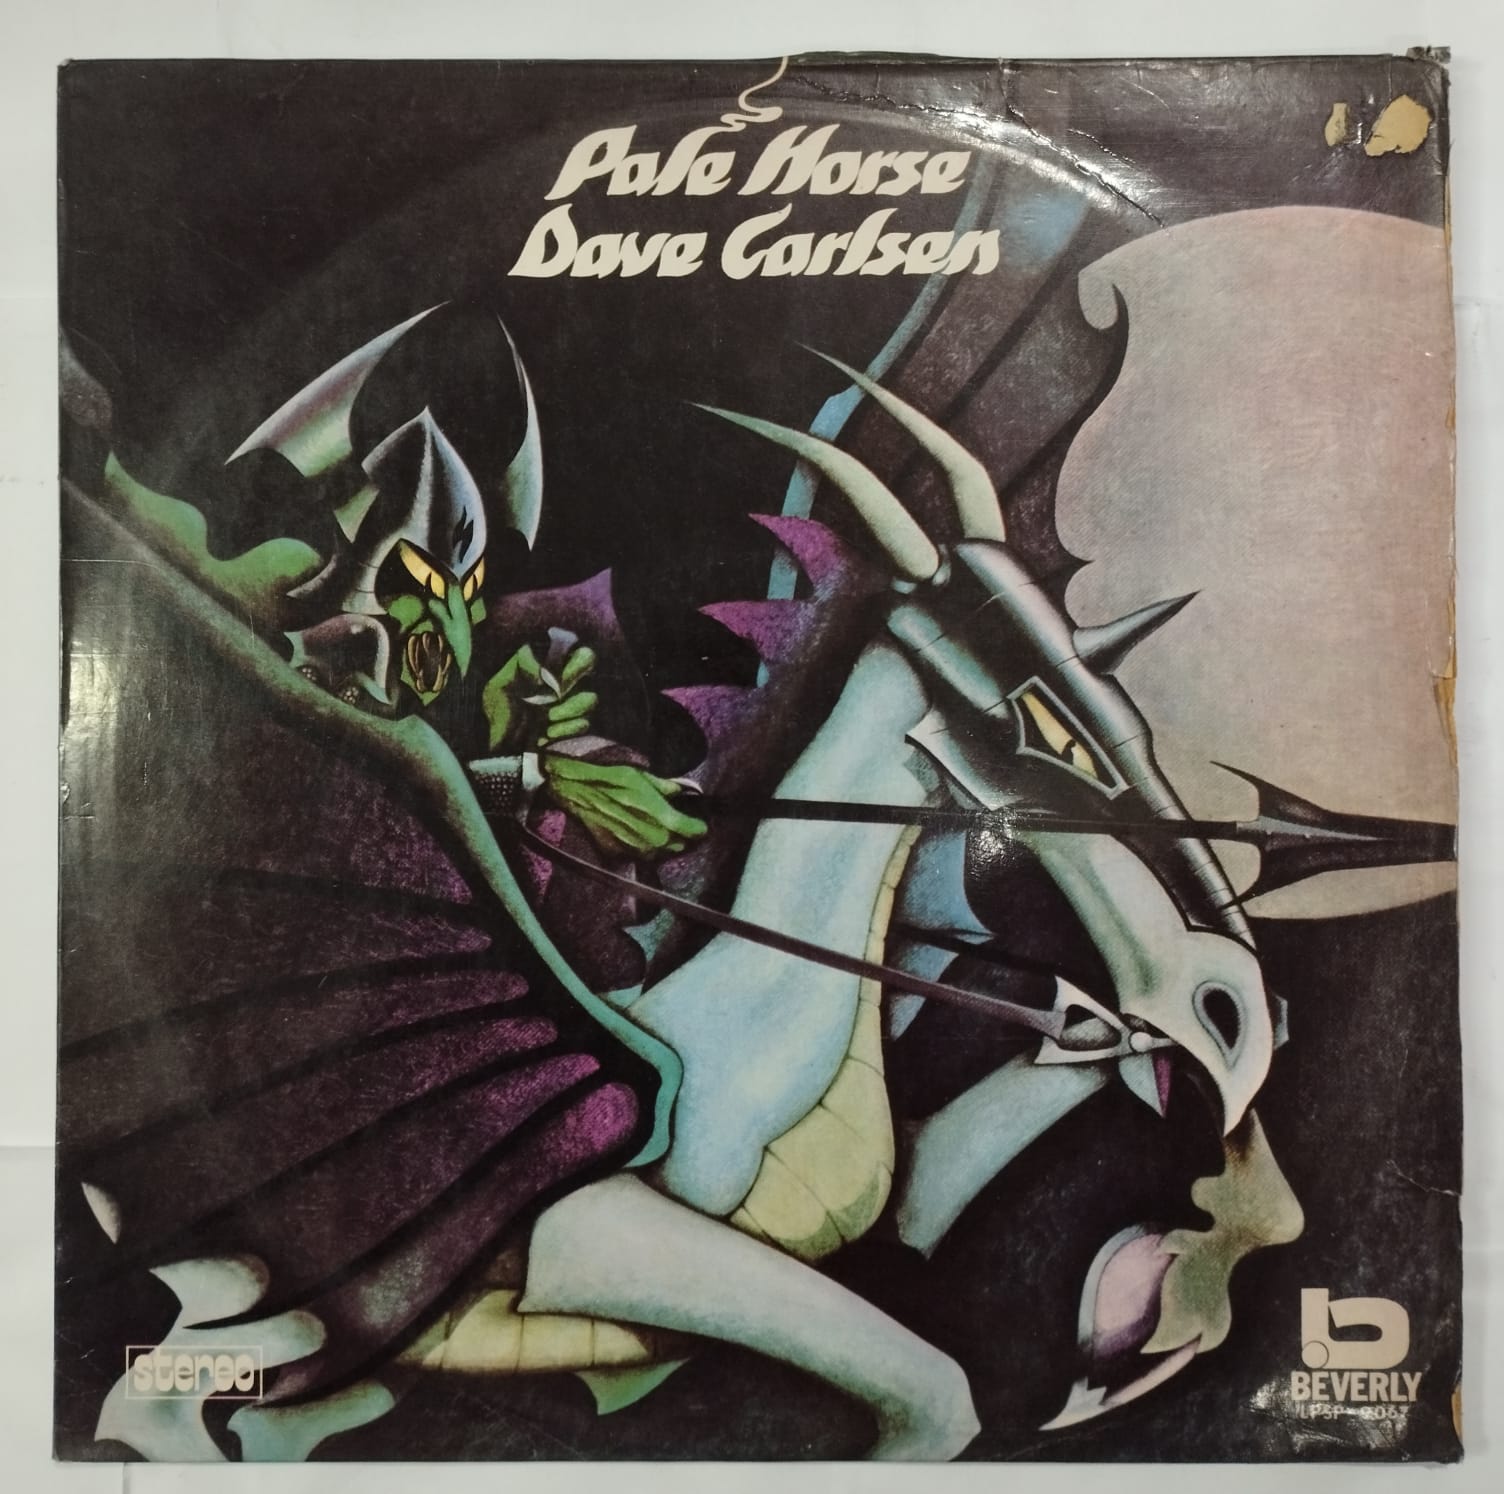 Dave Carlsen ‎– Pale Horse (Álbum)